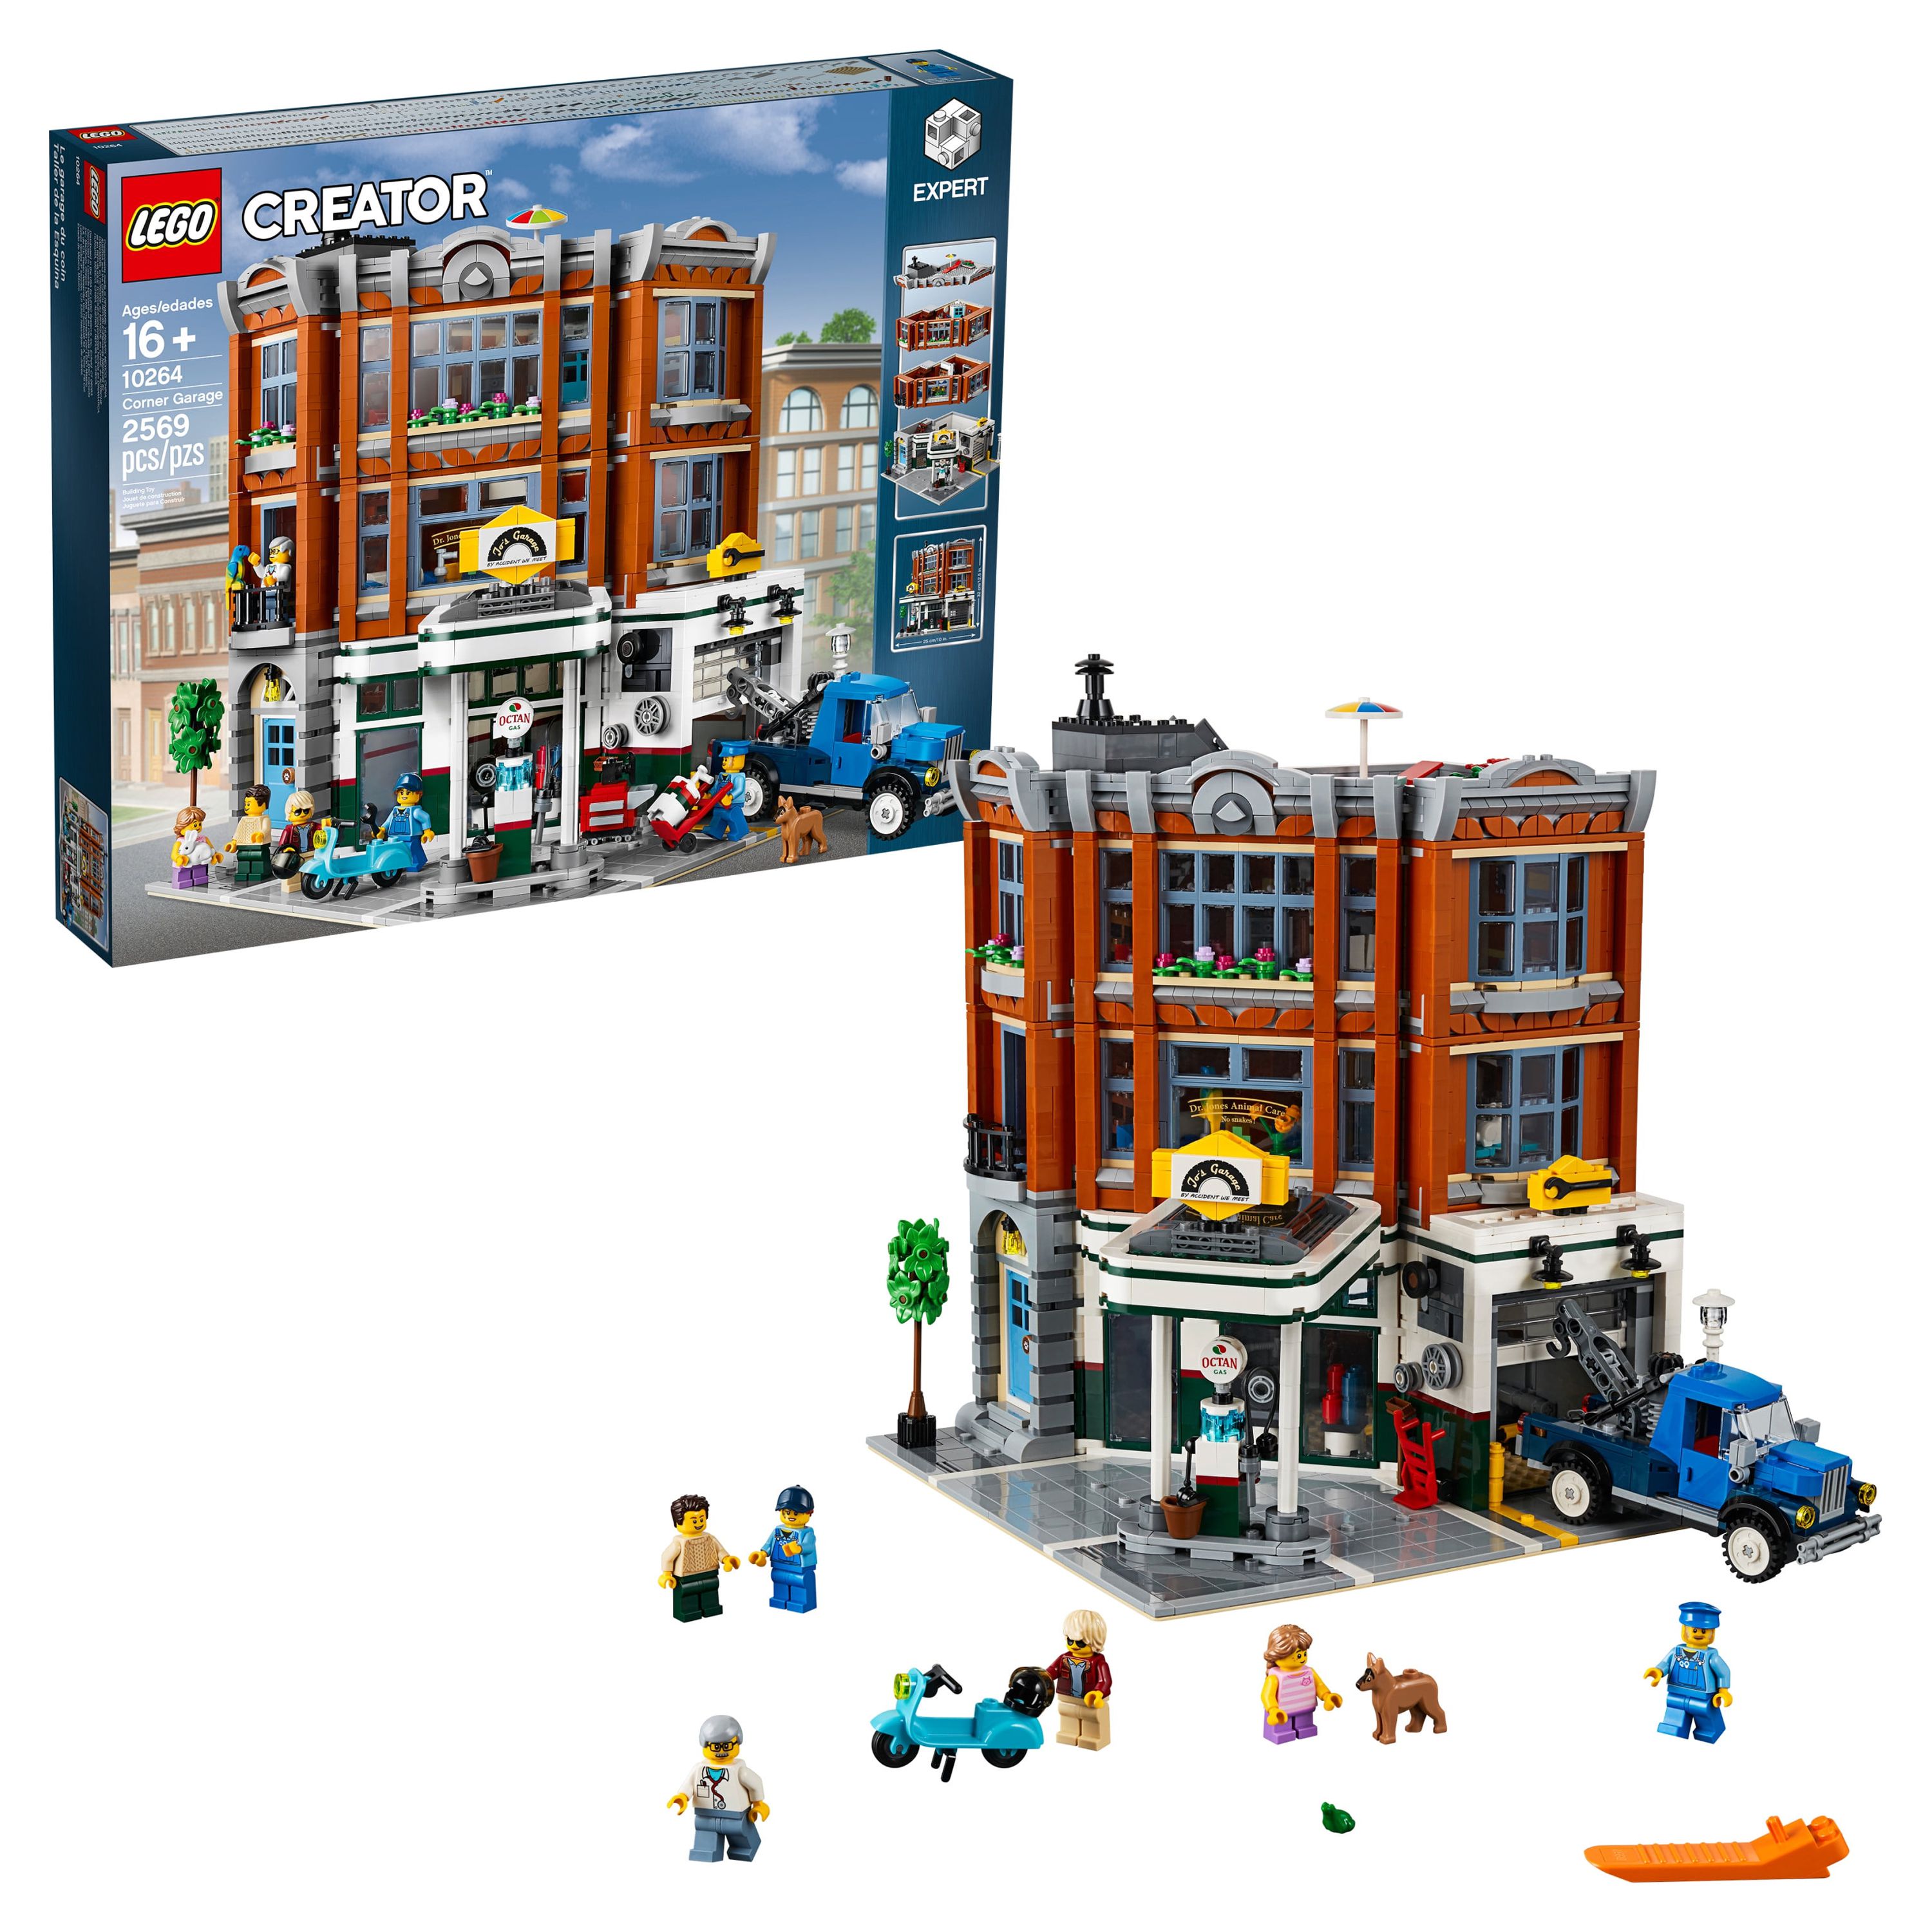 LEGO Creator Expert Corner Garage 10264 Building Set (2,569 Pieces) - image 1 of 4